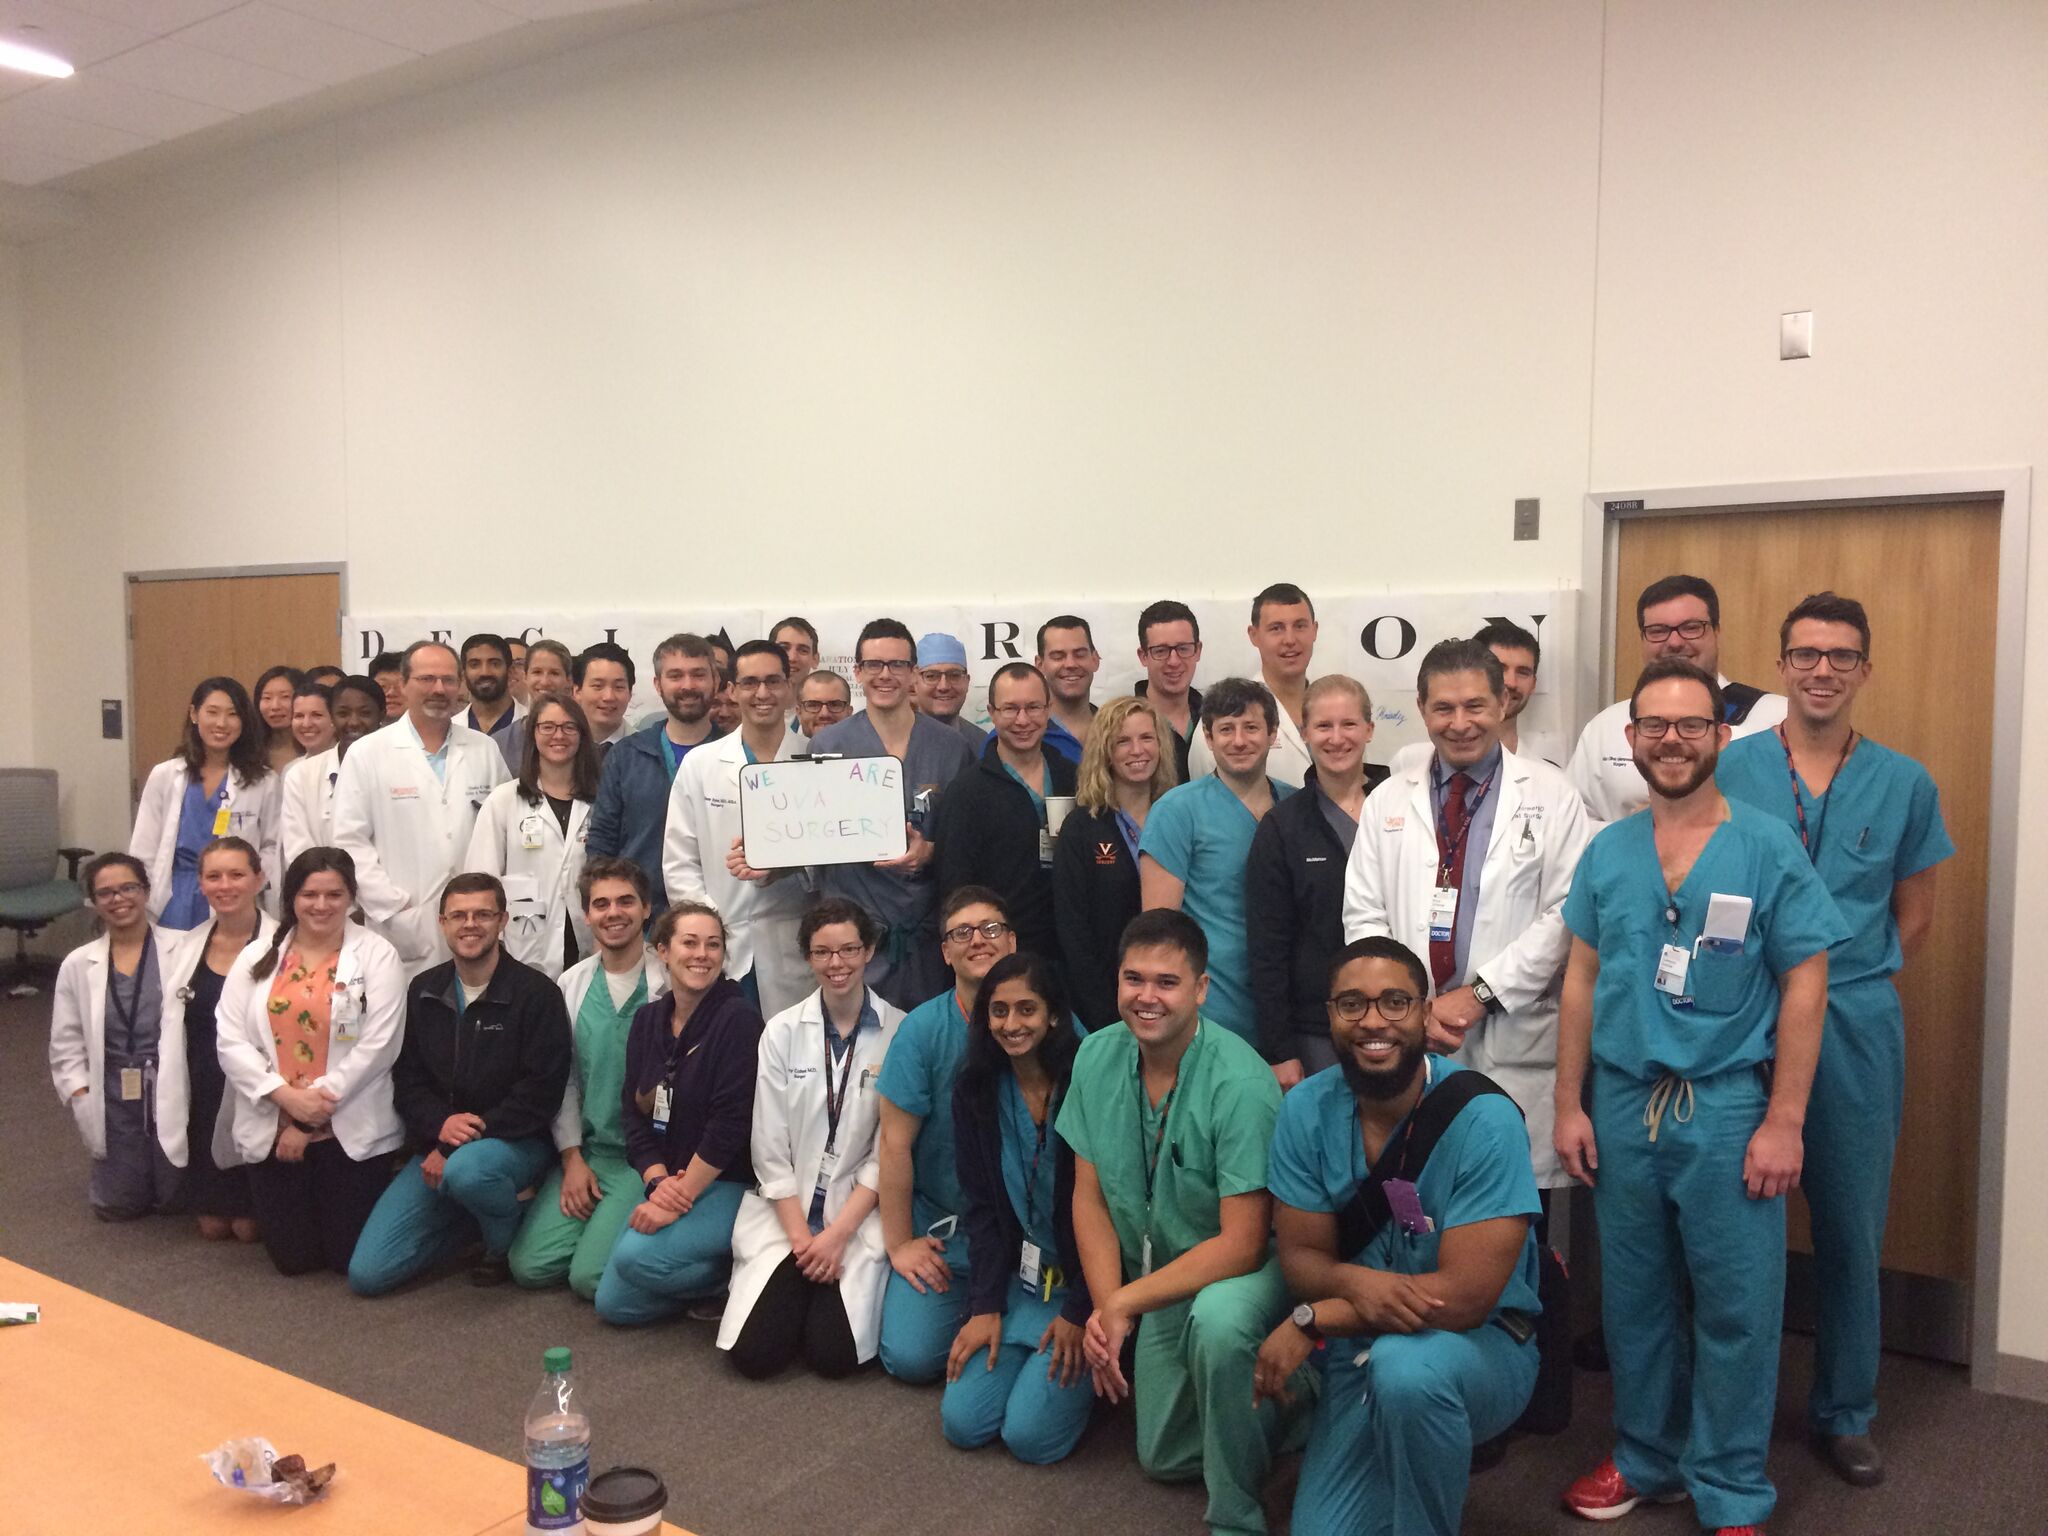 Photo: UVA School of Medicine, Surgical Residency group photo